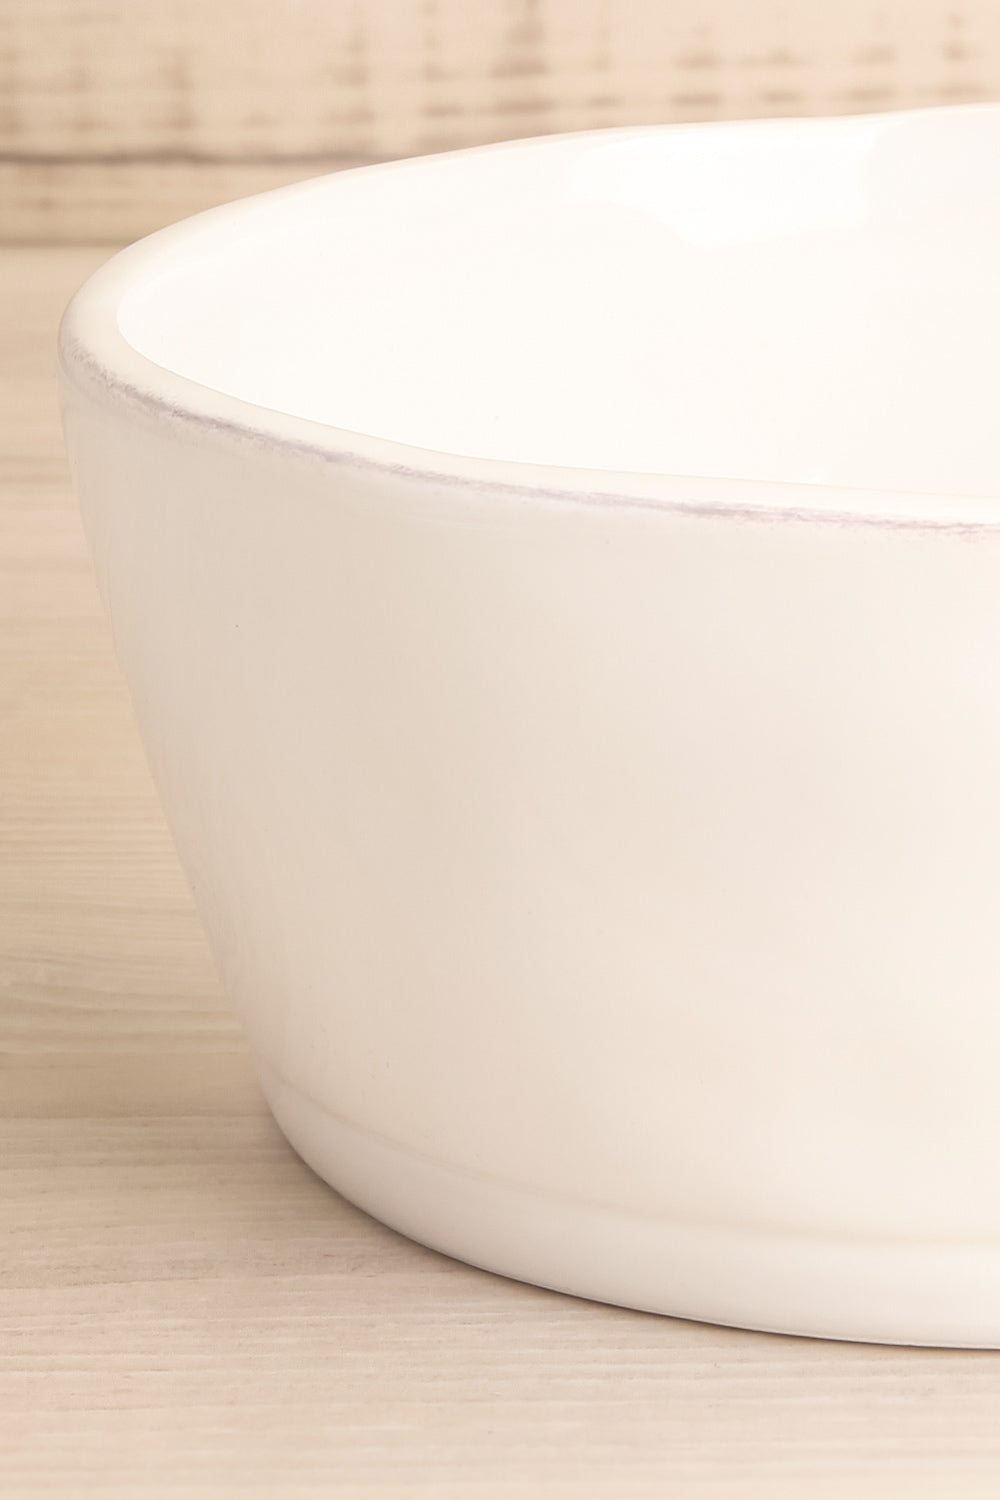 Capizun Textured White Ceramic Bowl | La Petite Garçonne Chpt. 2 2